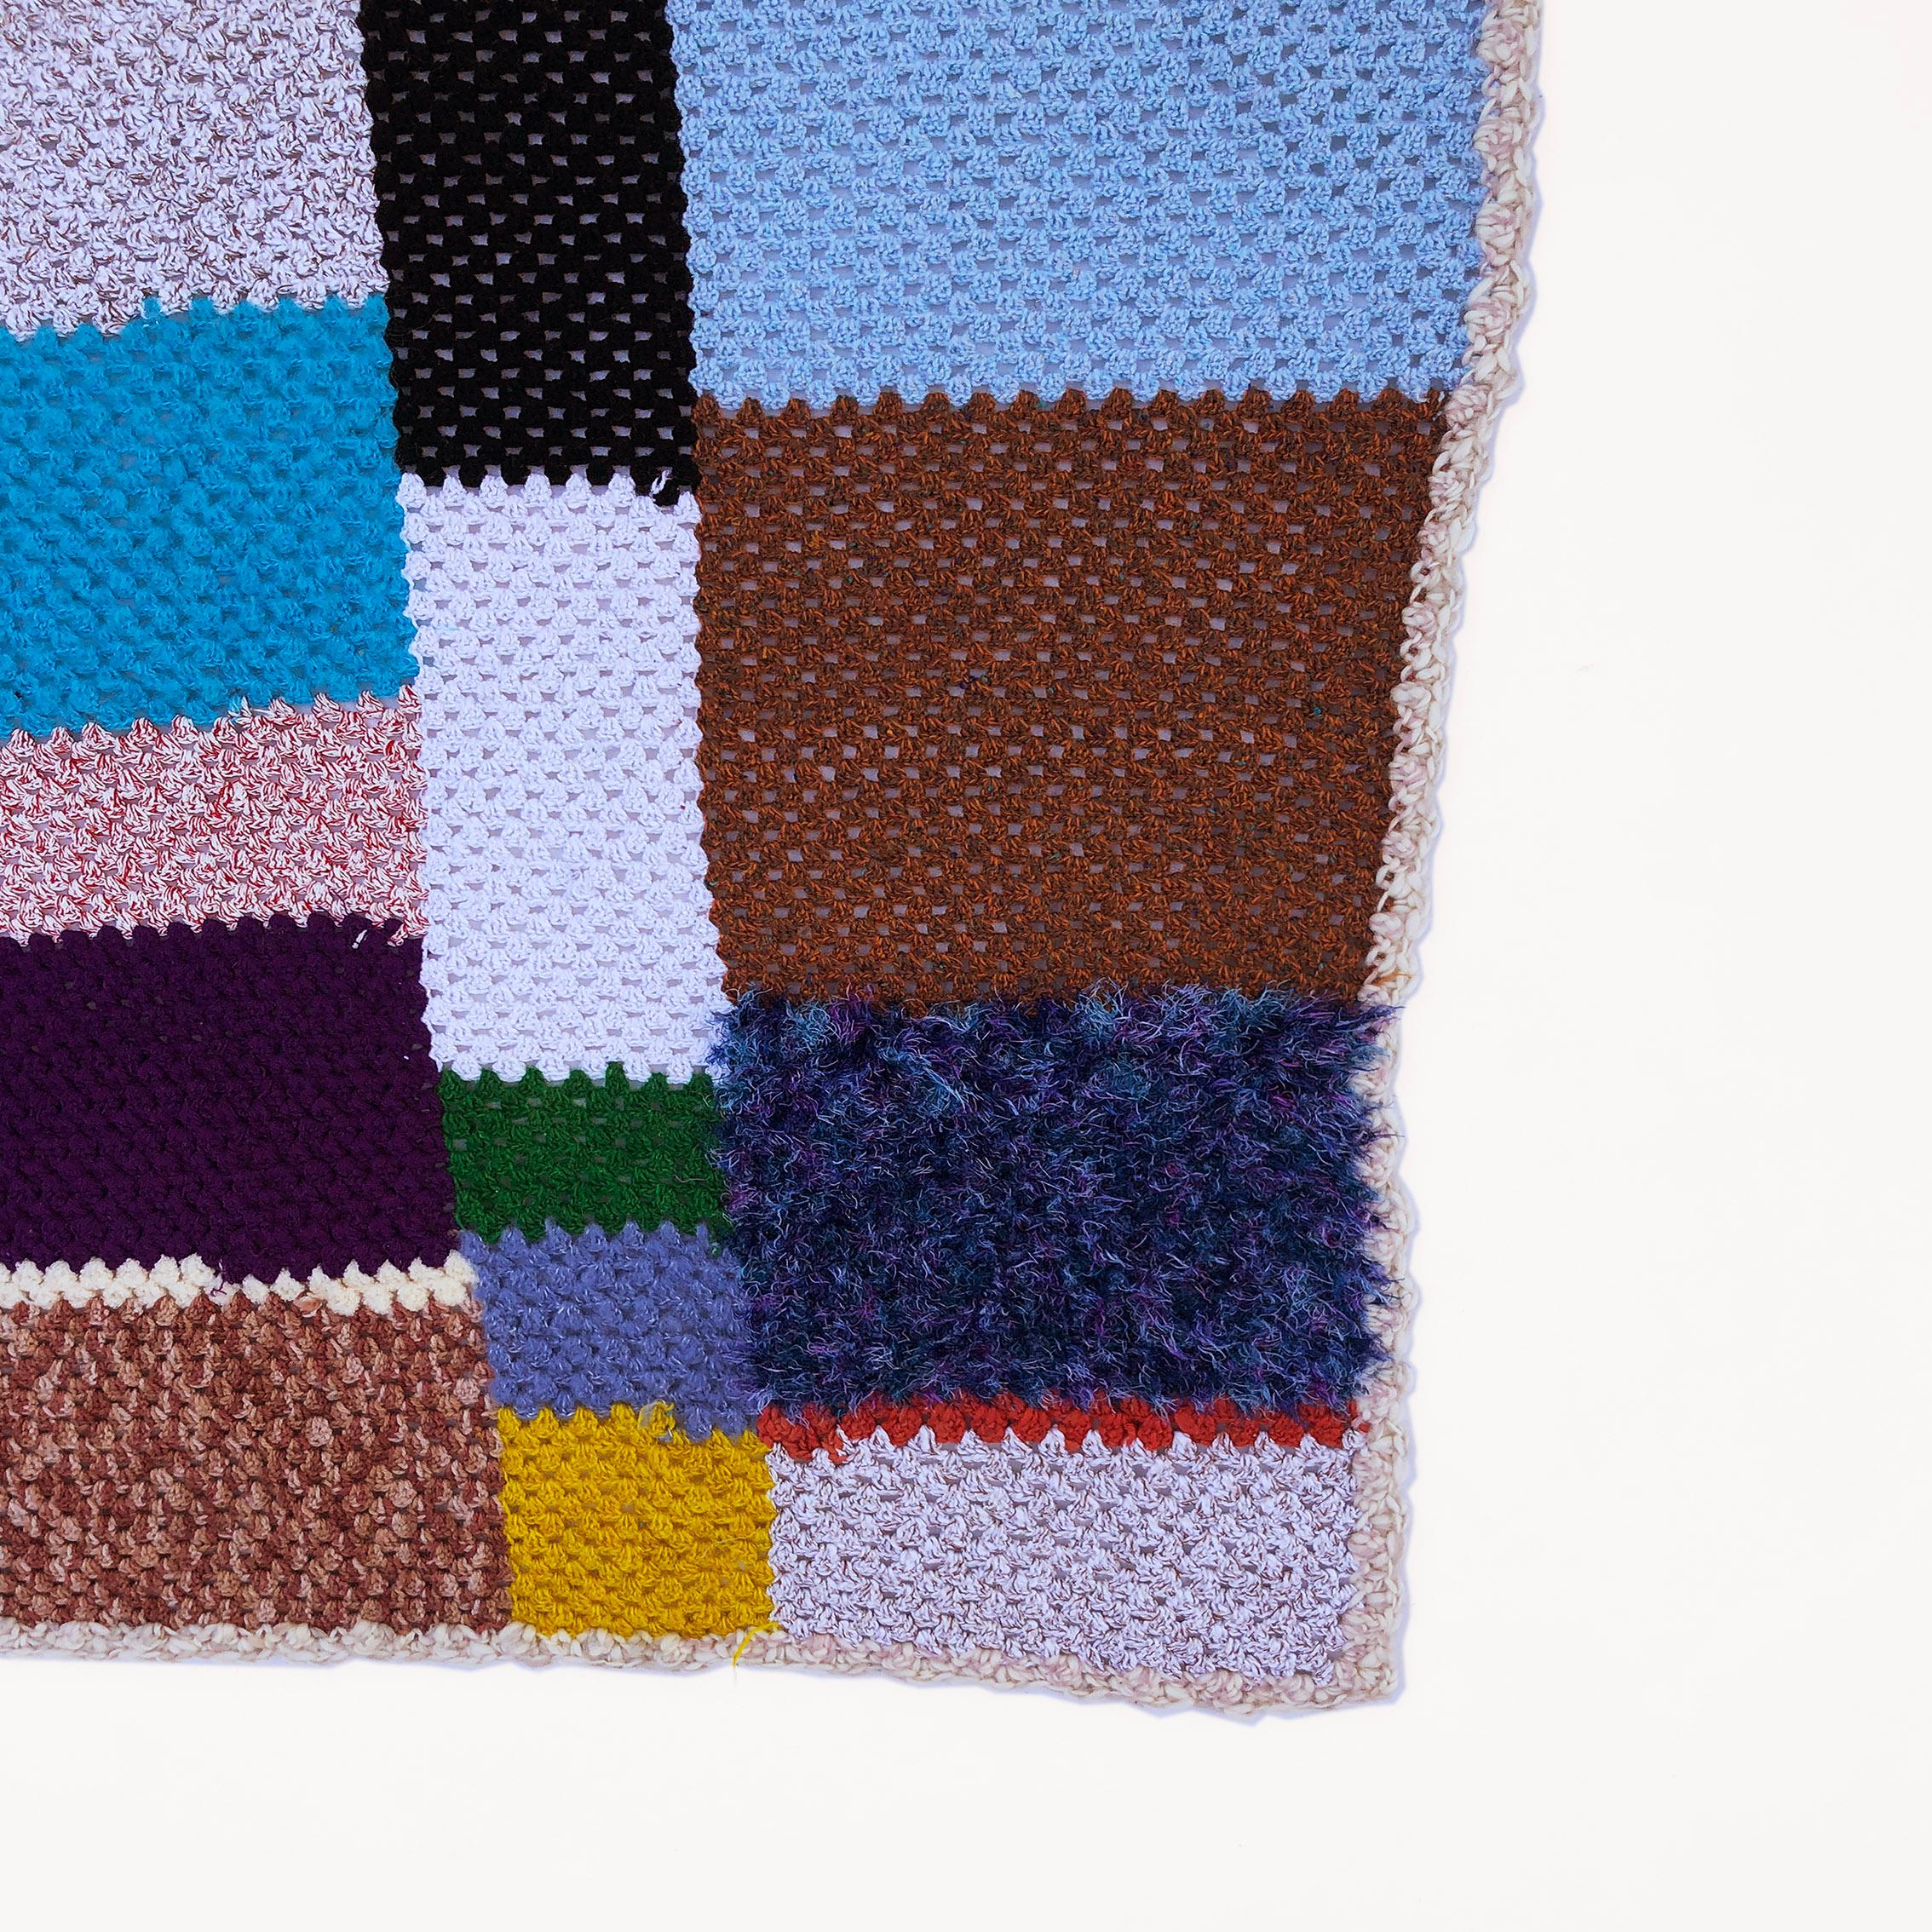 Greek Handmade Crochet Patchwork Throw #2 Knitted Wool Blanket Sofa Bed Armchair